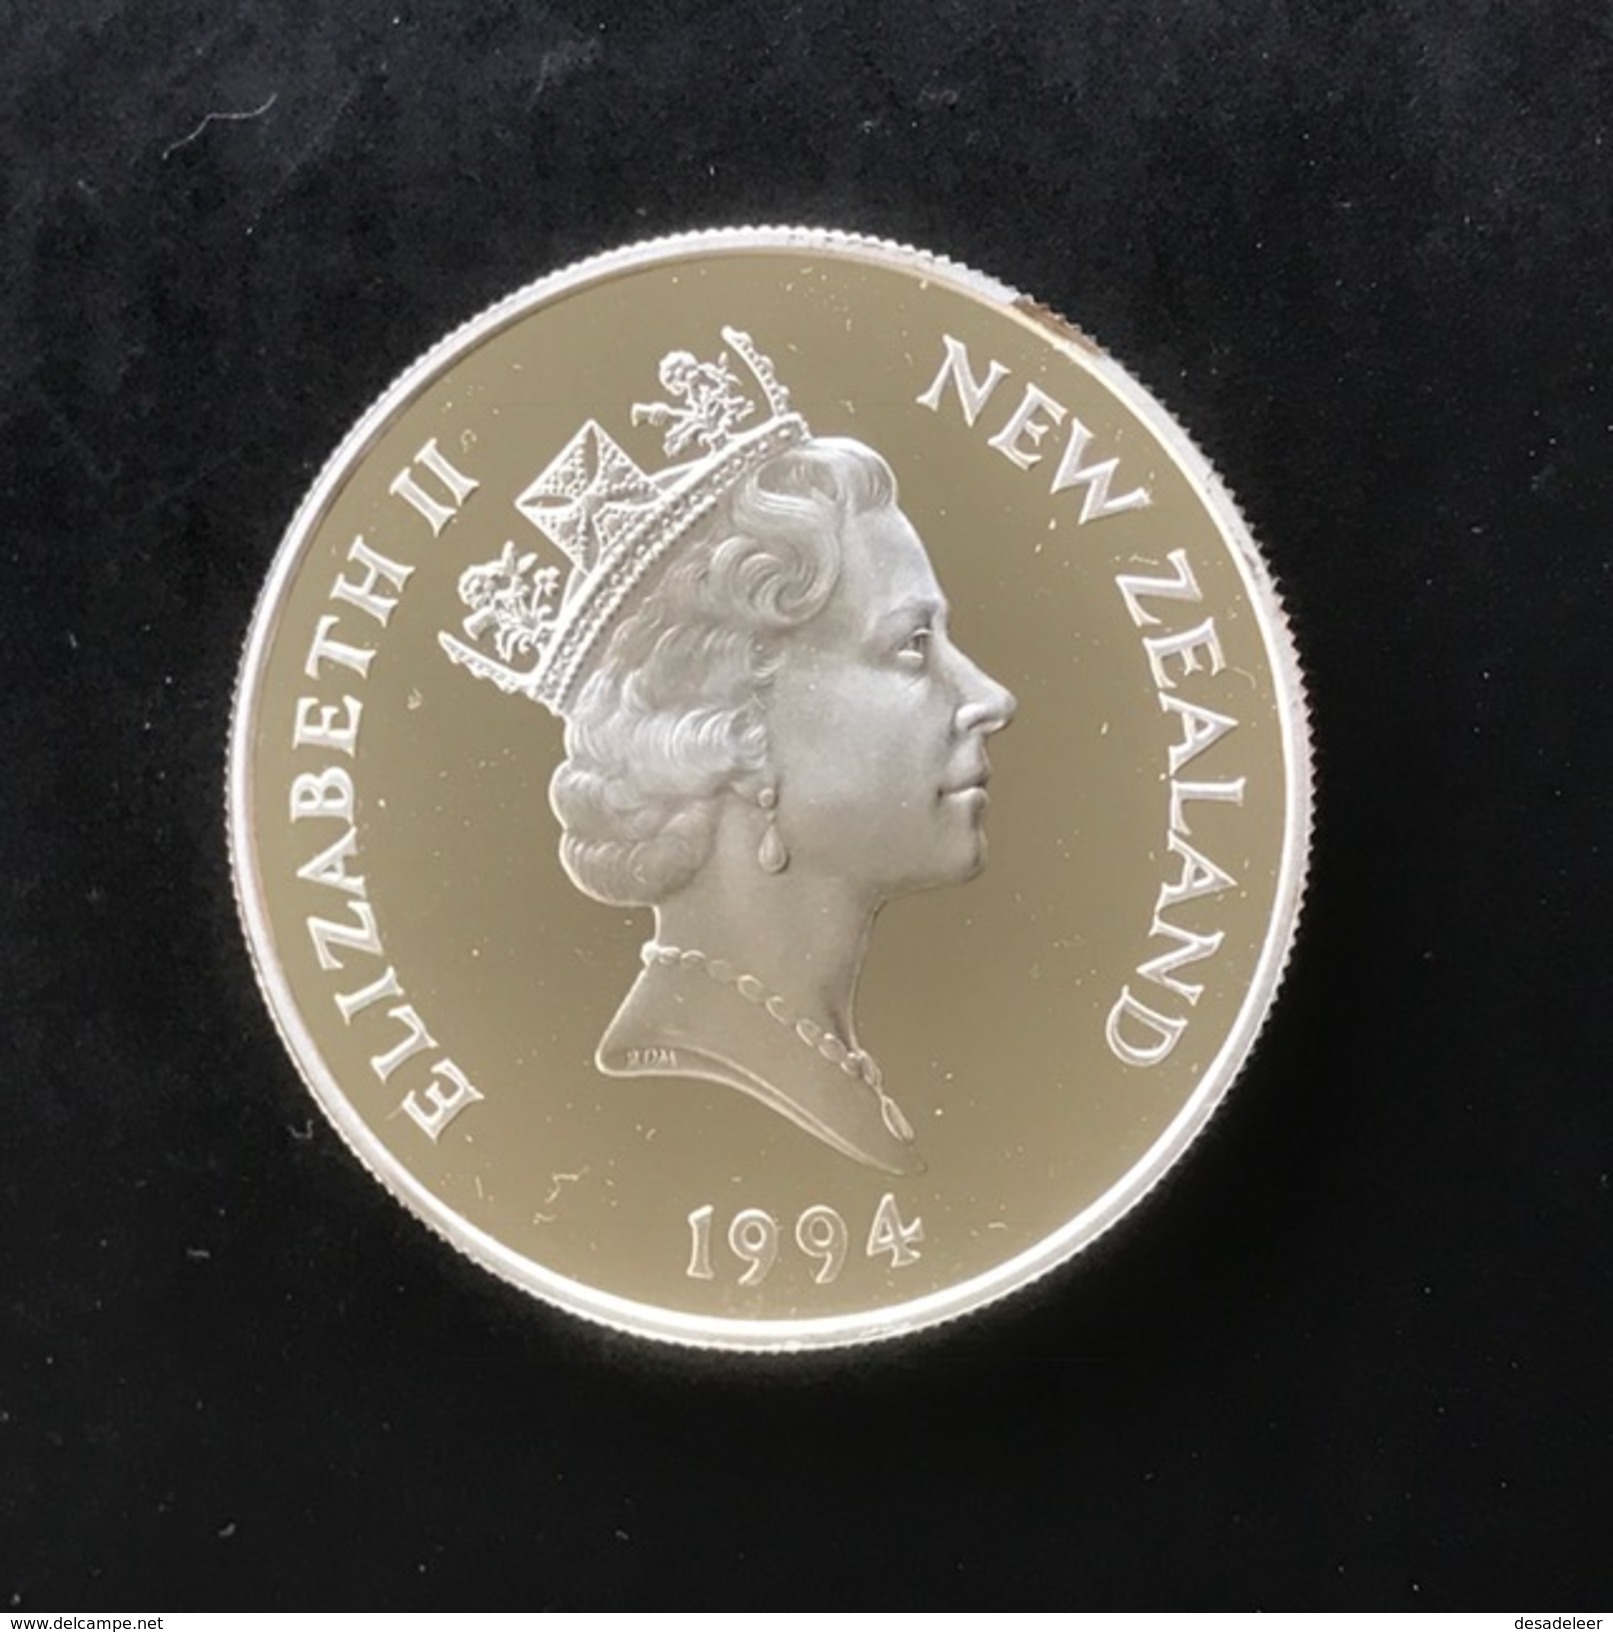 New Zealand 5 Dollar 1994 (Proof) - Winter Olympics - Nueva Zelanda